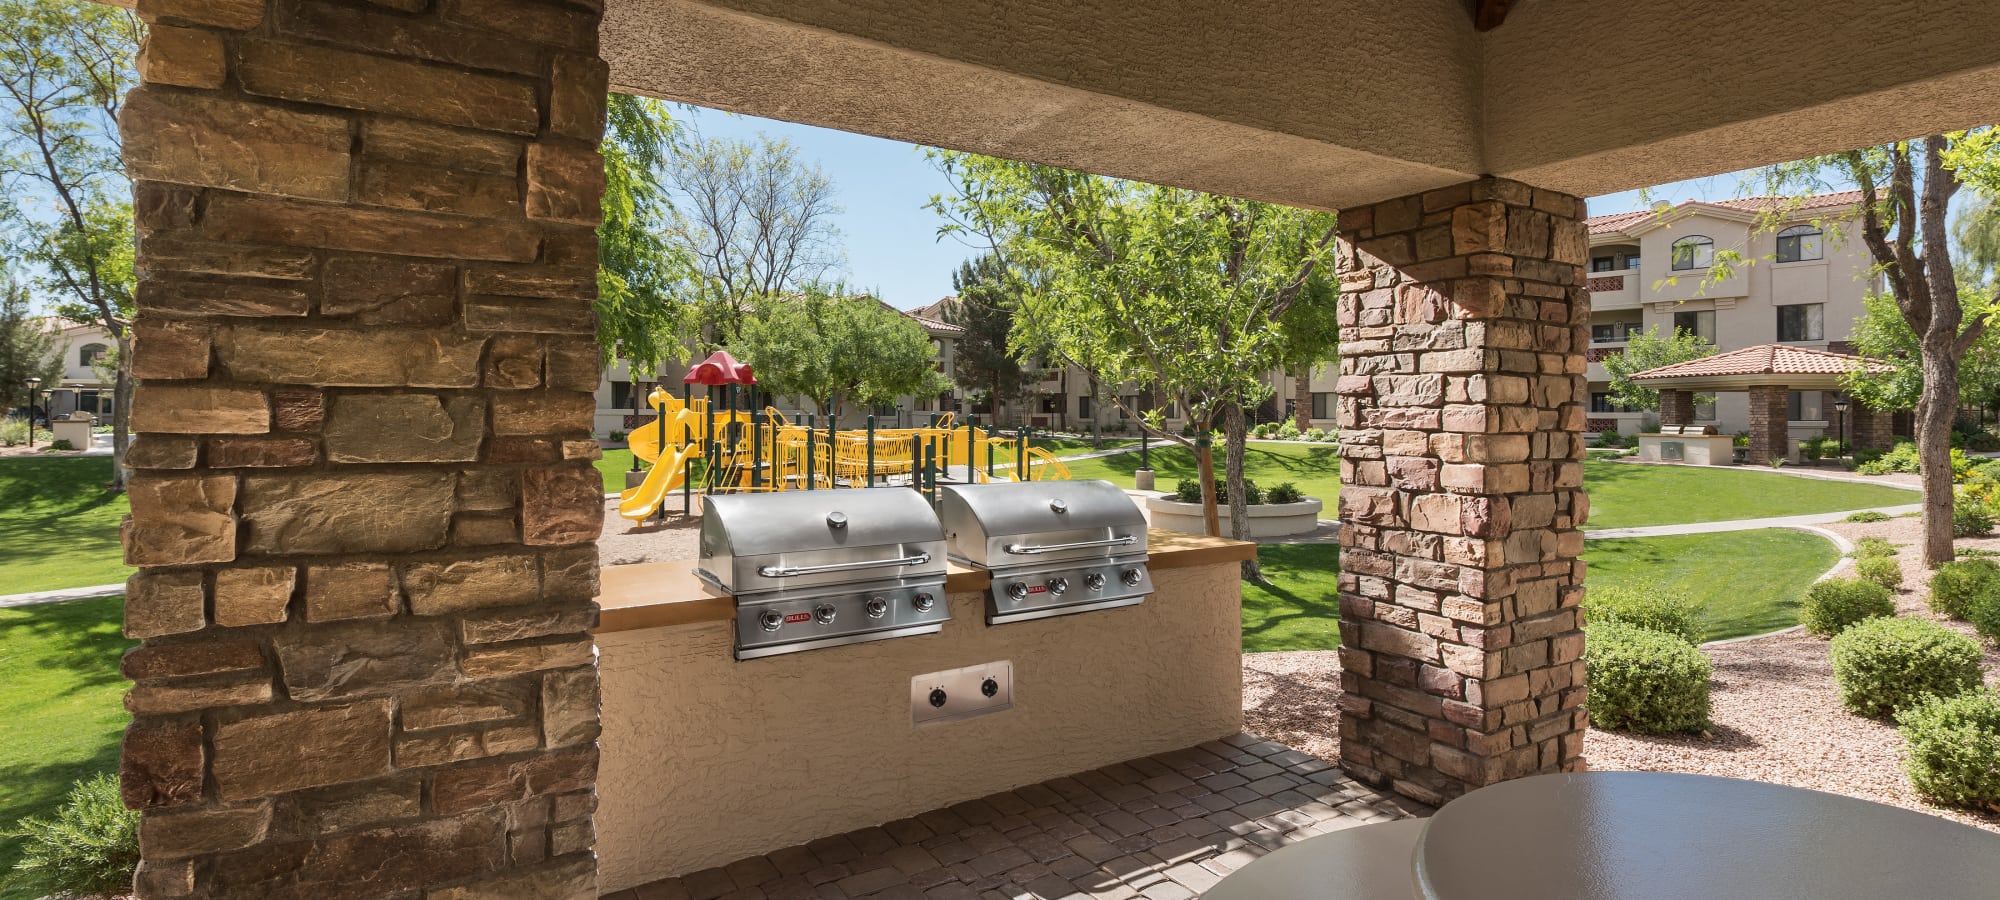 Large BBQ grill at San Hacienda in Chandler, Arizona